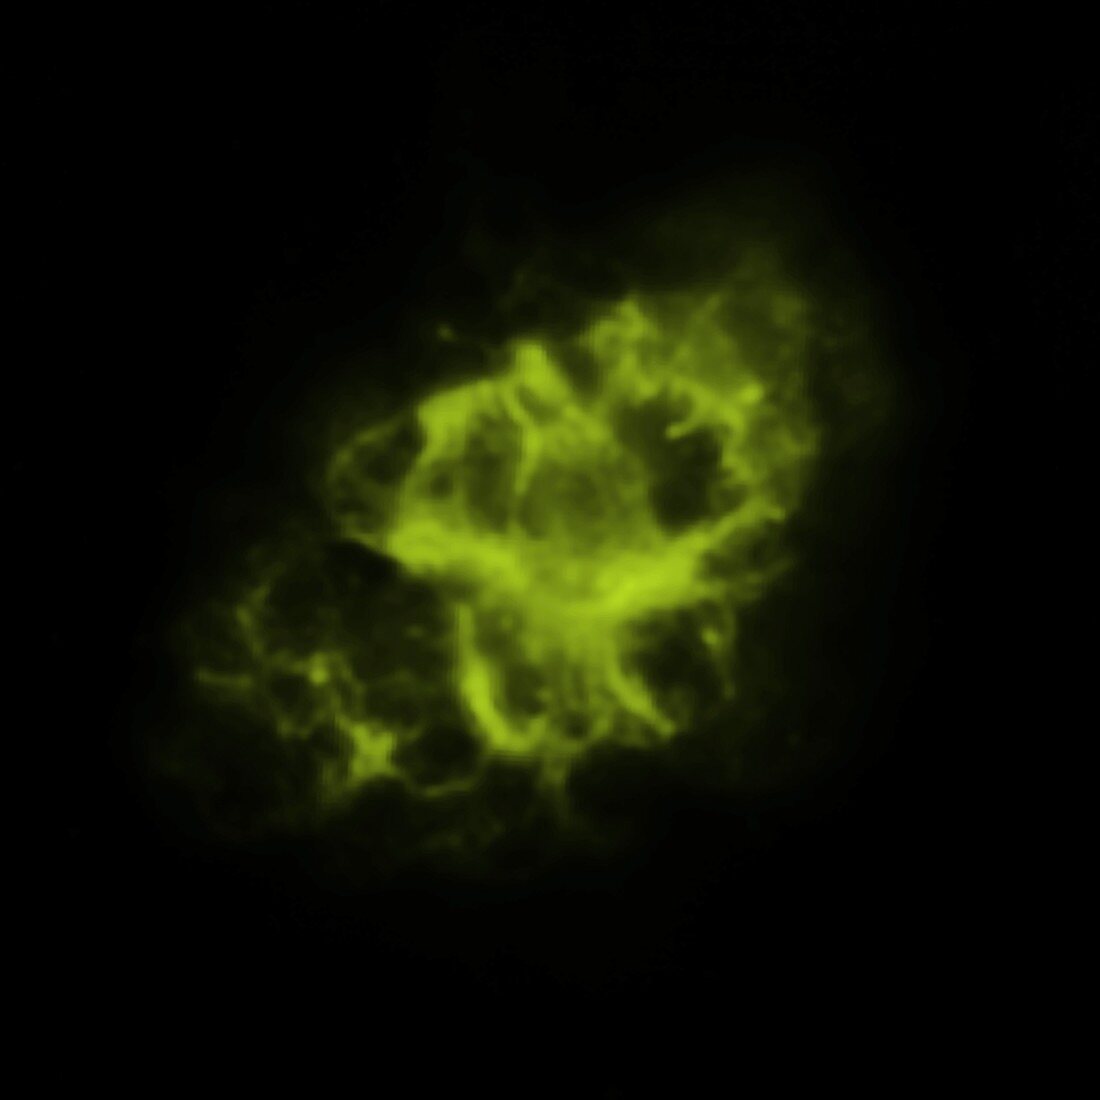 Crab nebula, infrared image